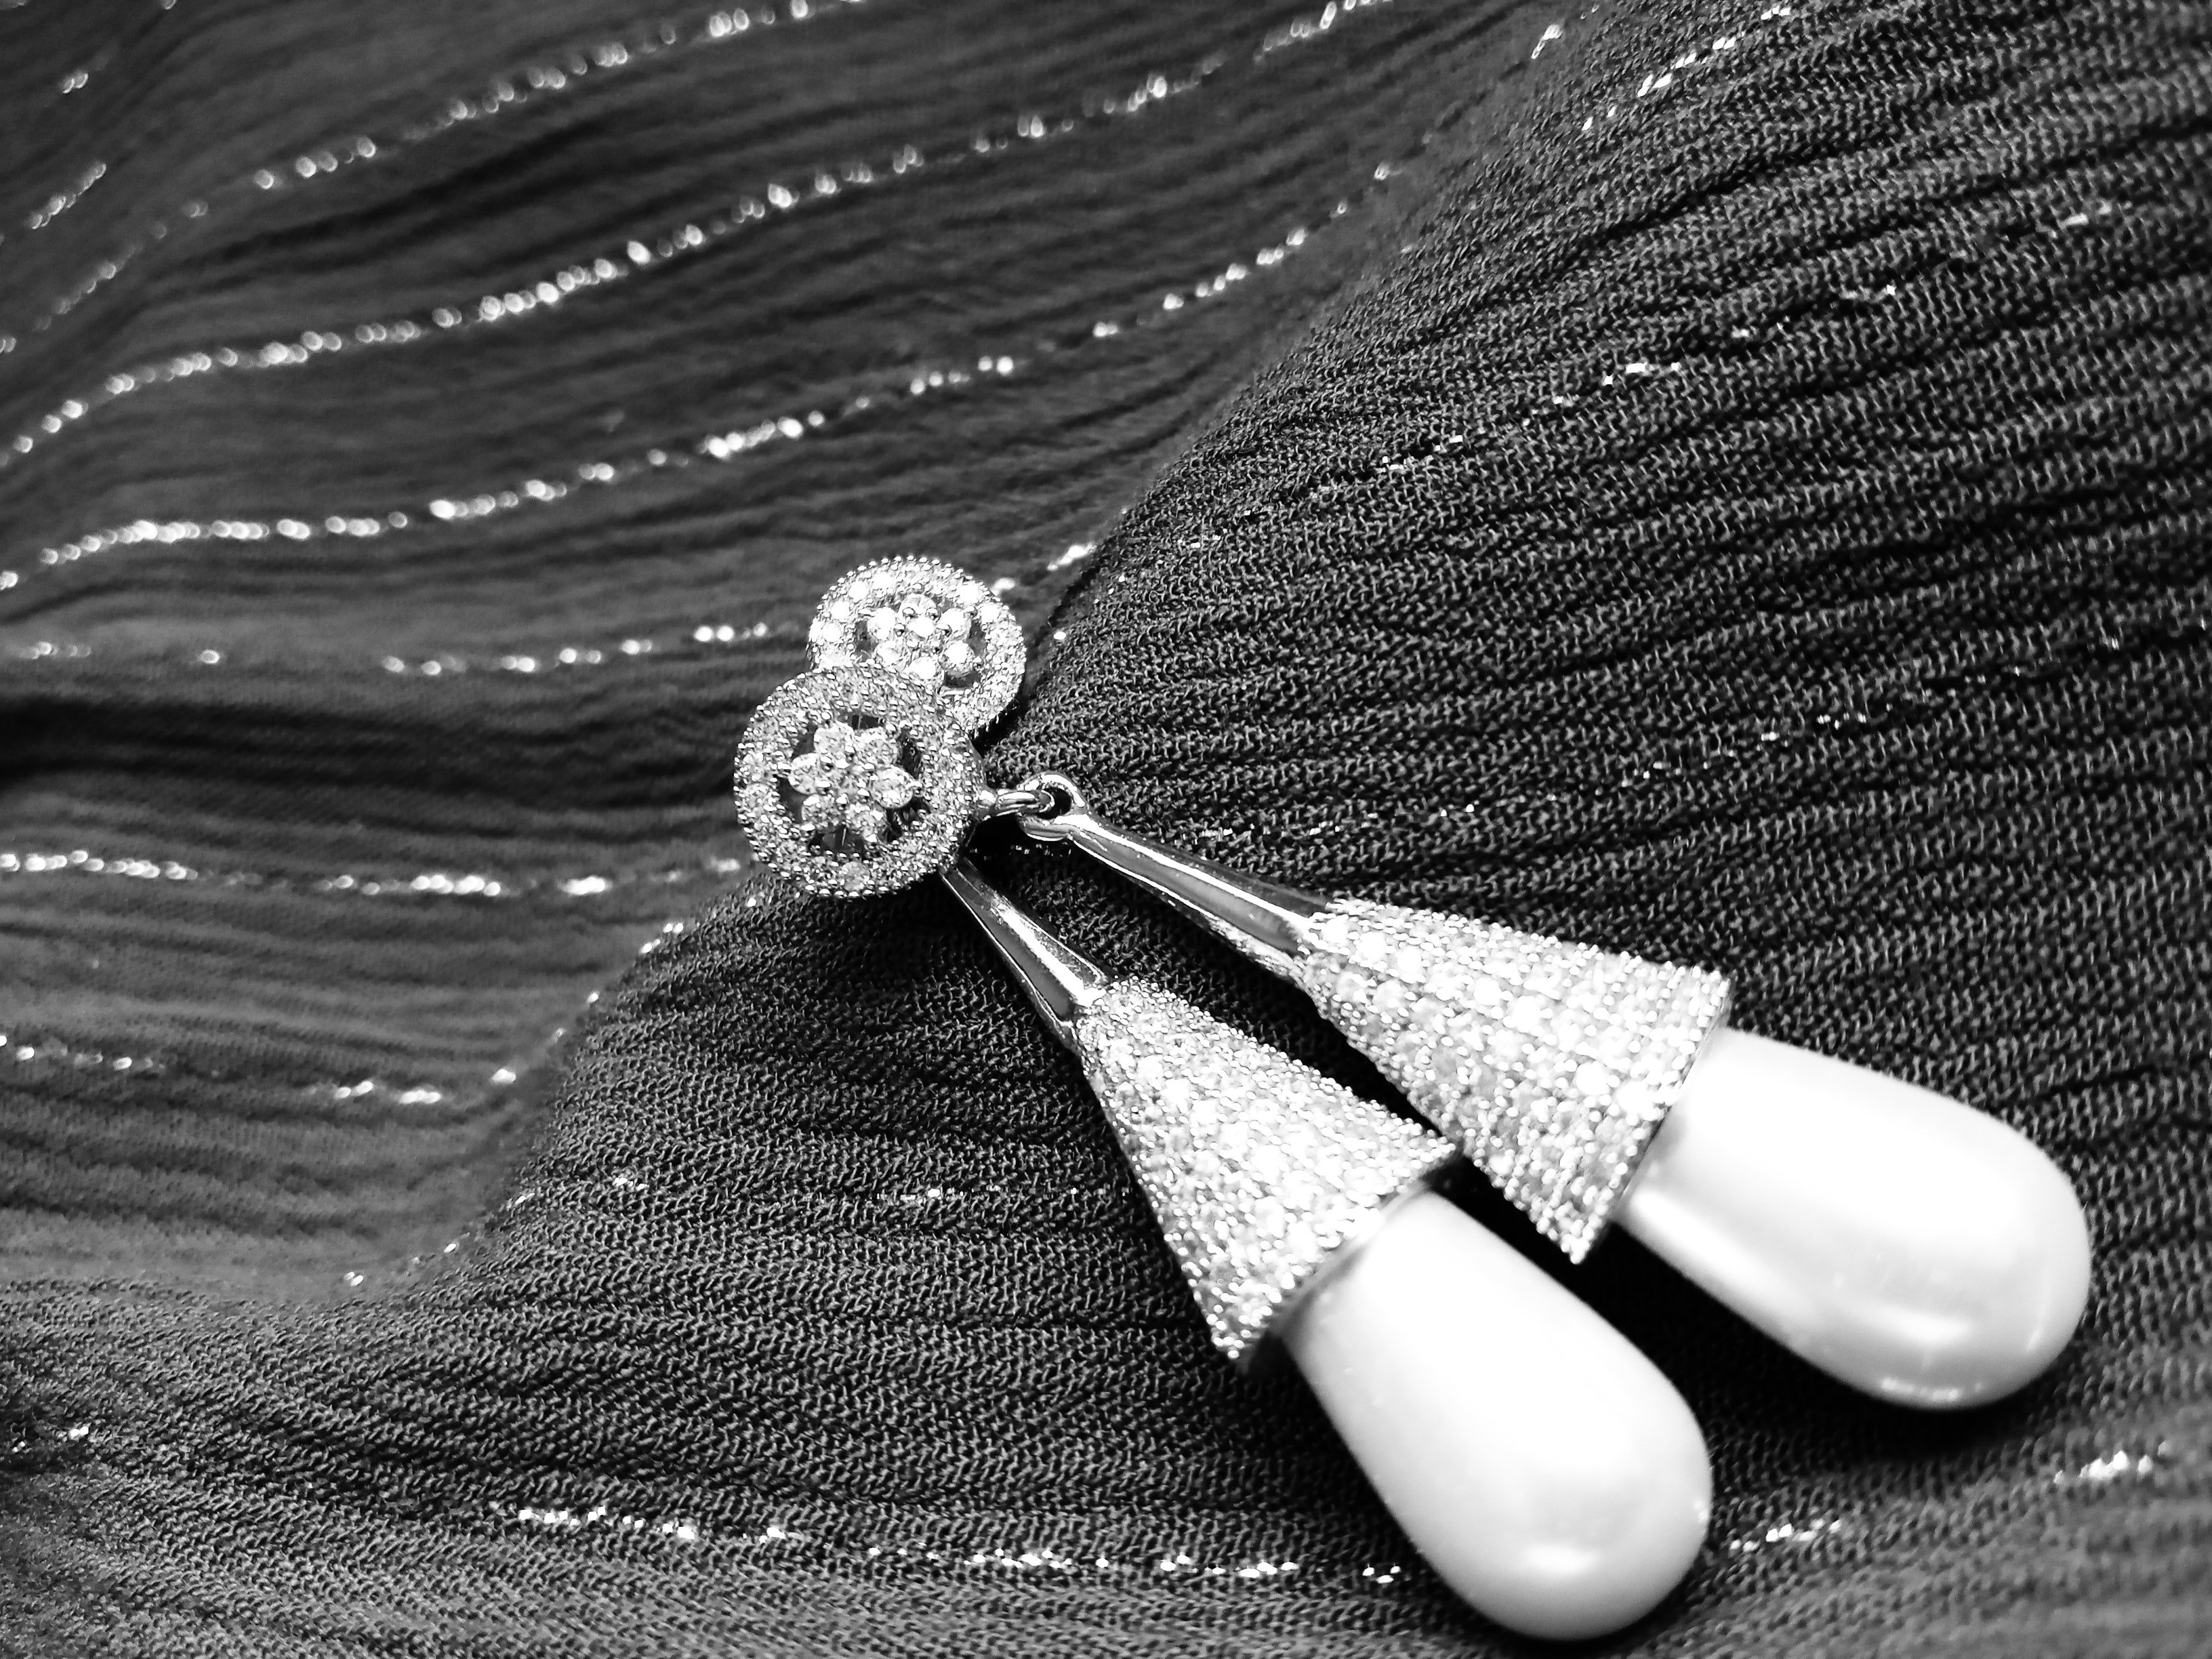 Lorraine und Harry haben Diamantohrringe im Sofa gefunden. | Quelle: Pexels